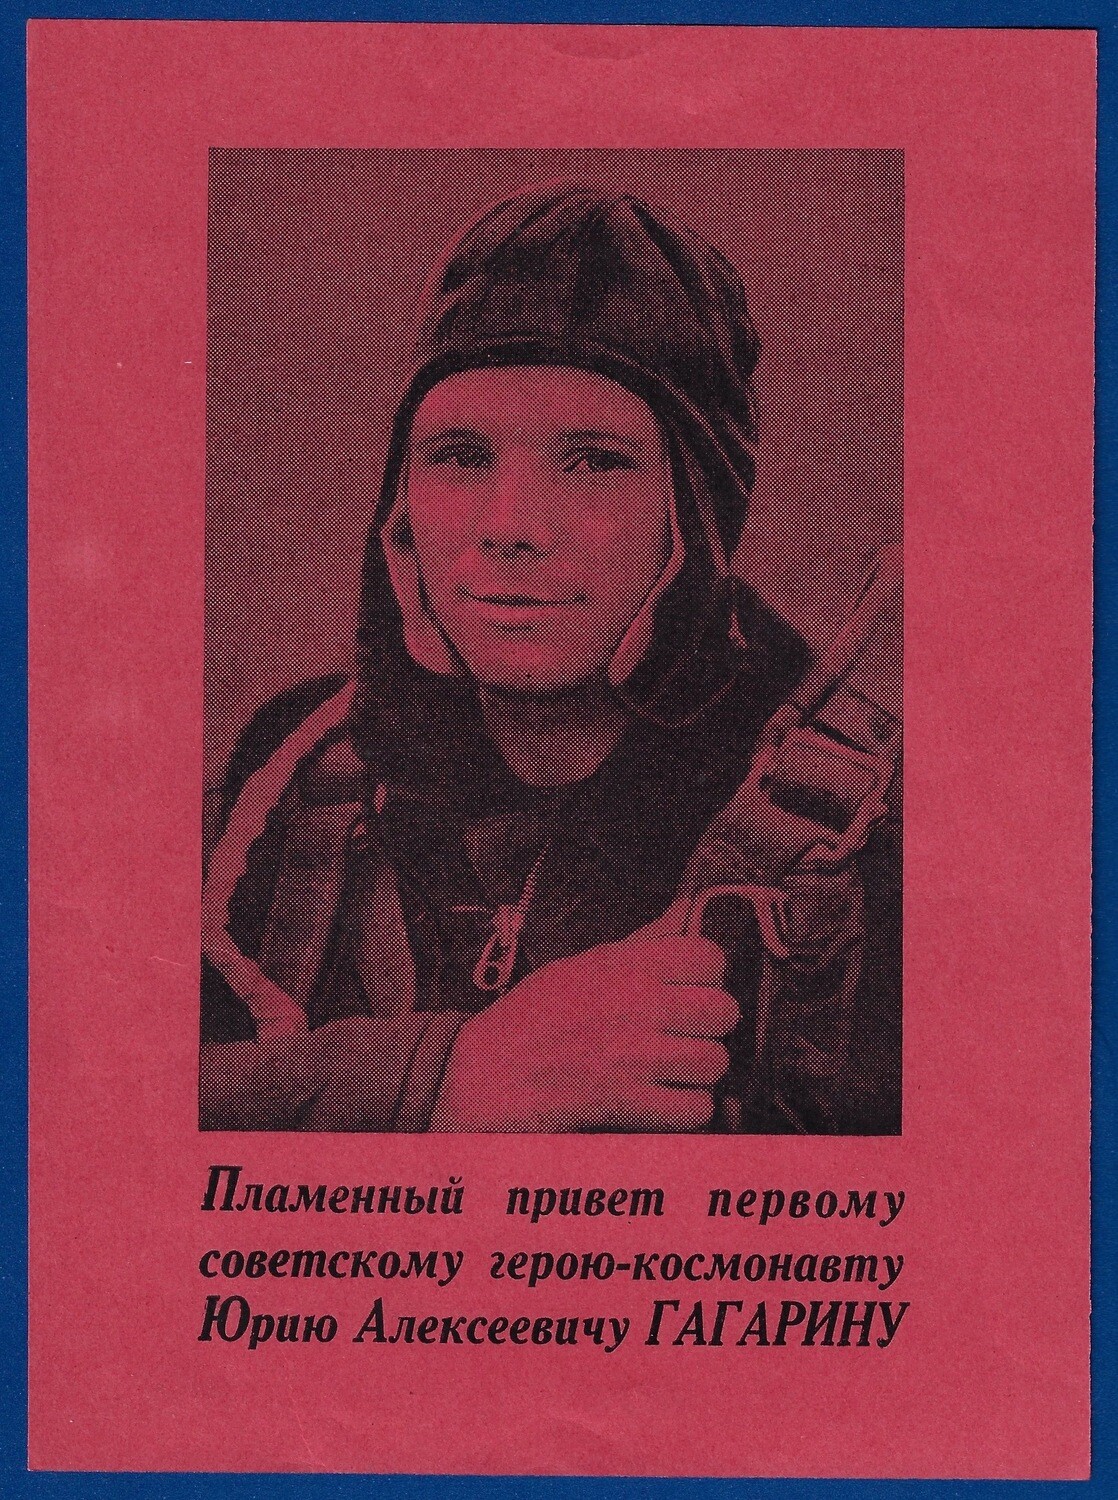 Yuri Gagarin's Original Soviet Leaflet RED